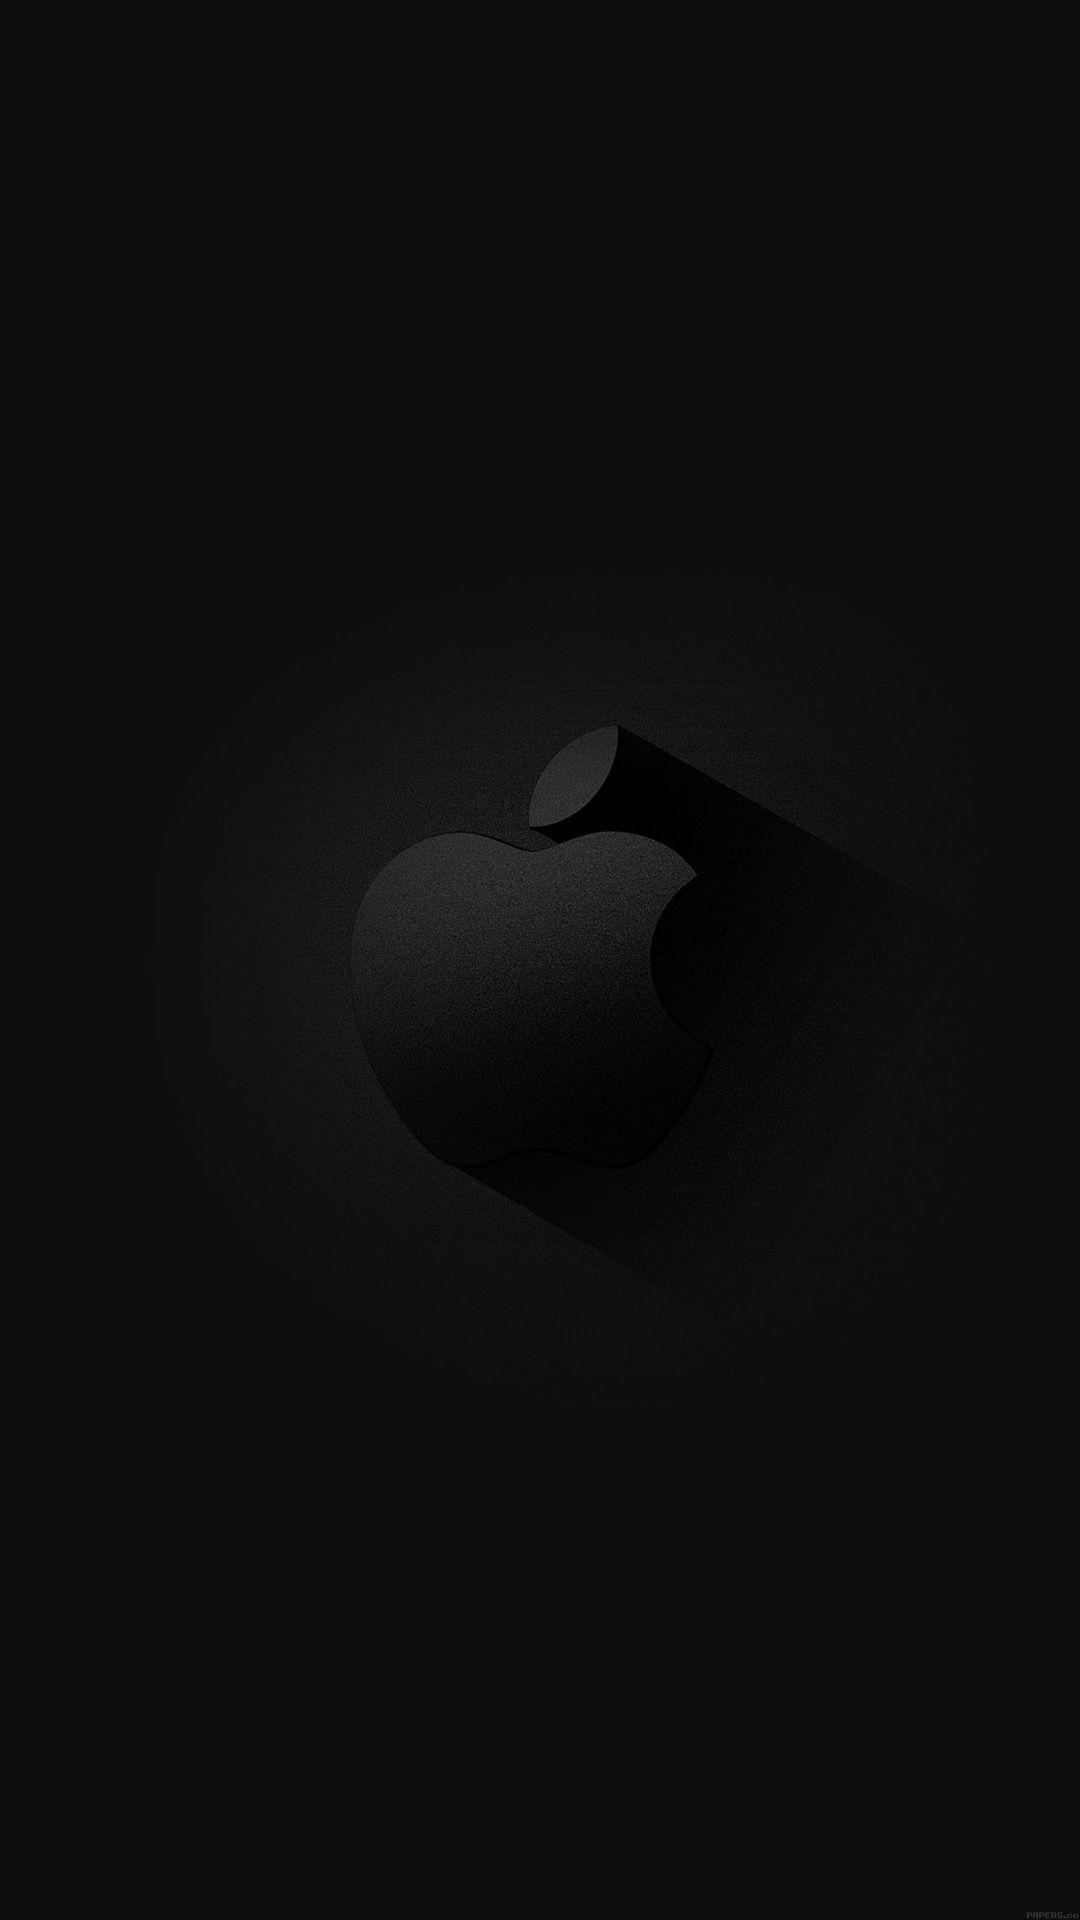 Black Apple iPhone Wallpaper Free Black Apple iPhone Background